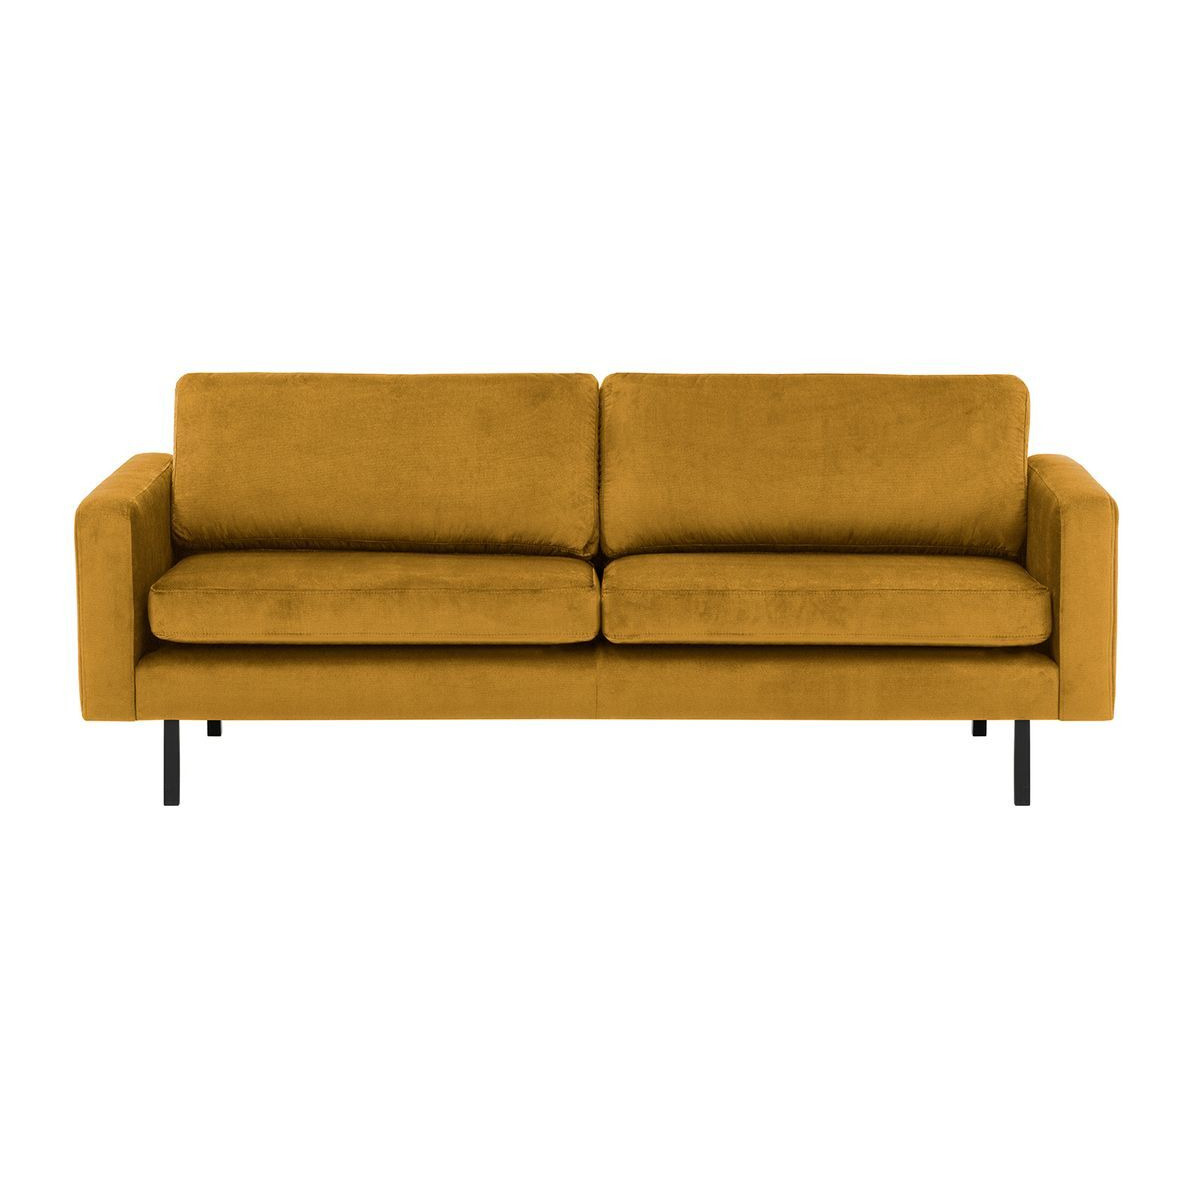 Lioni 3 Seater Sofa, golden - image 1